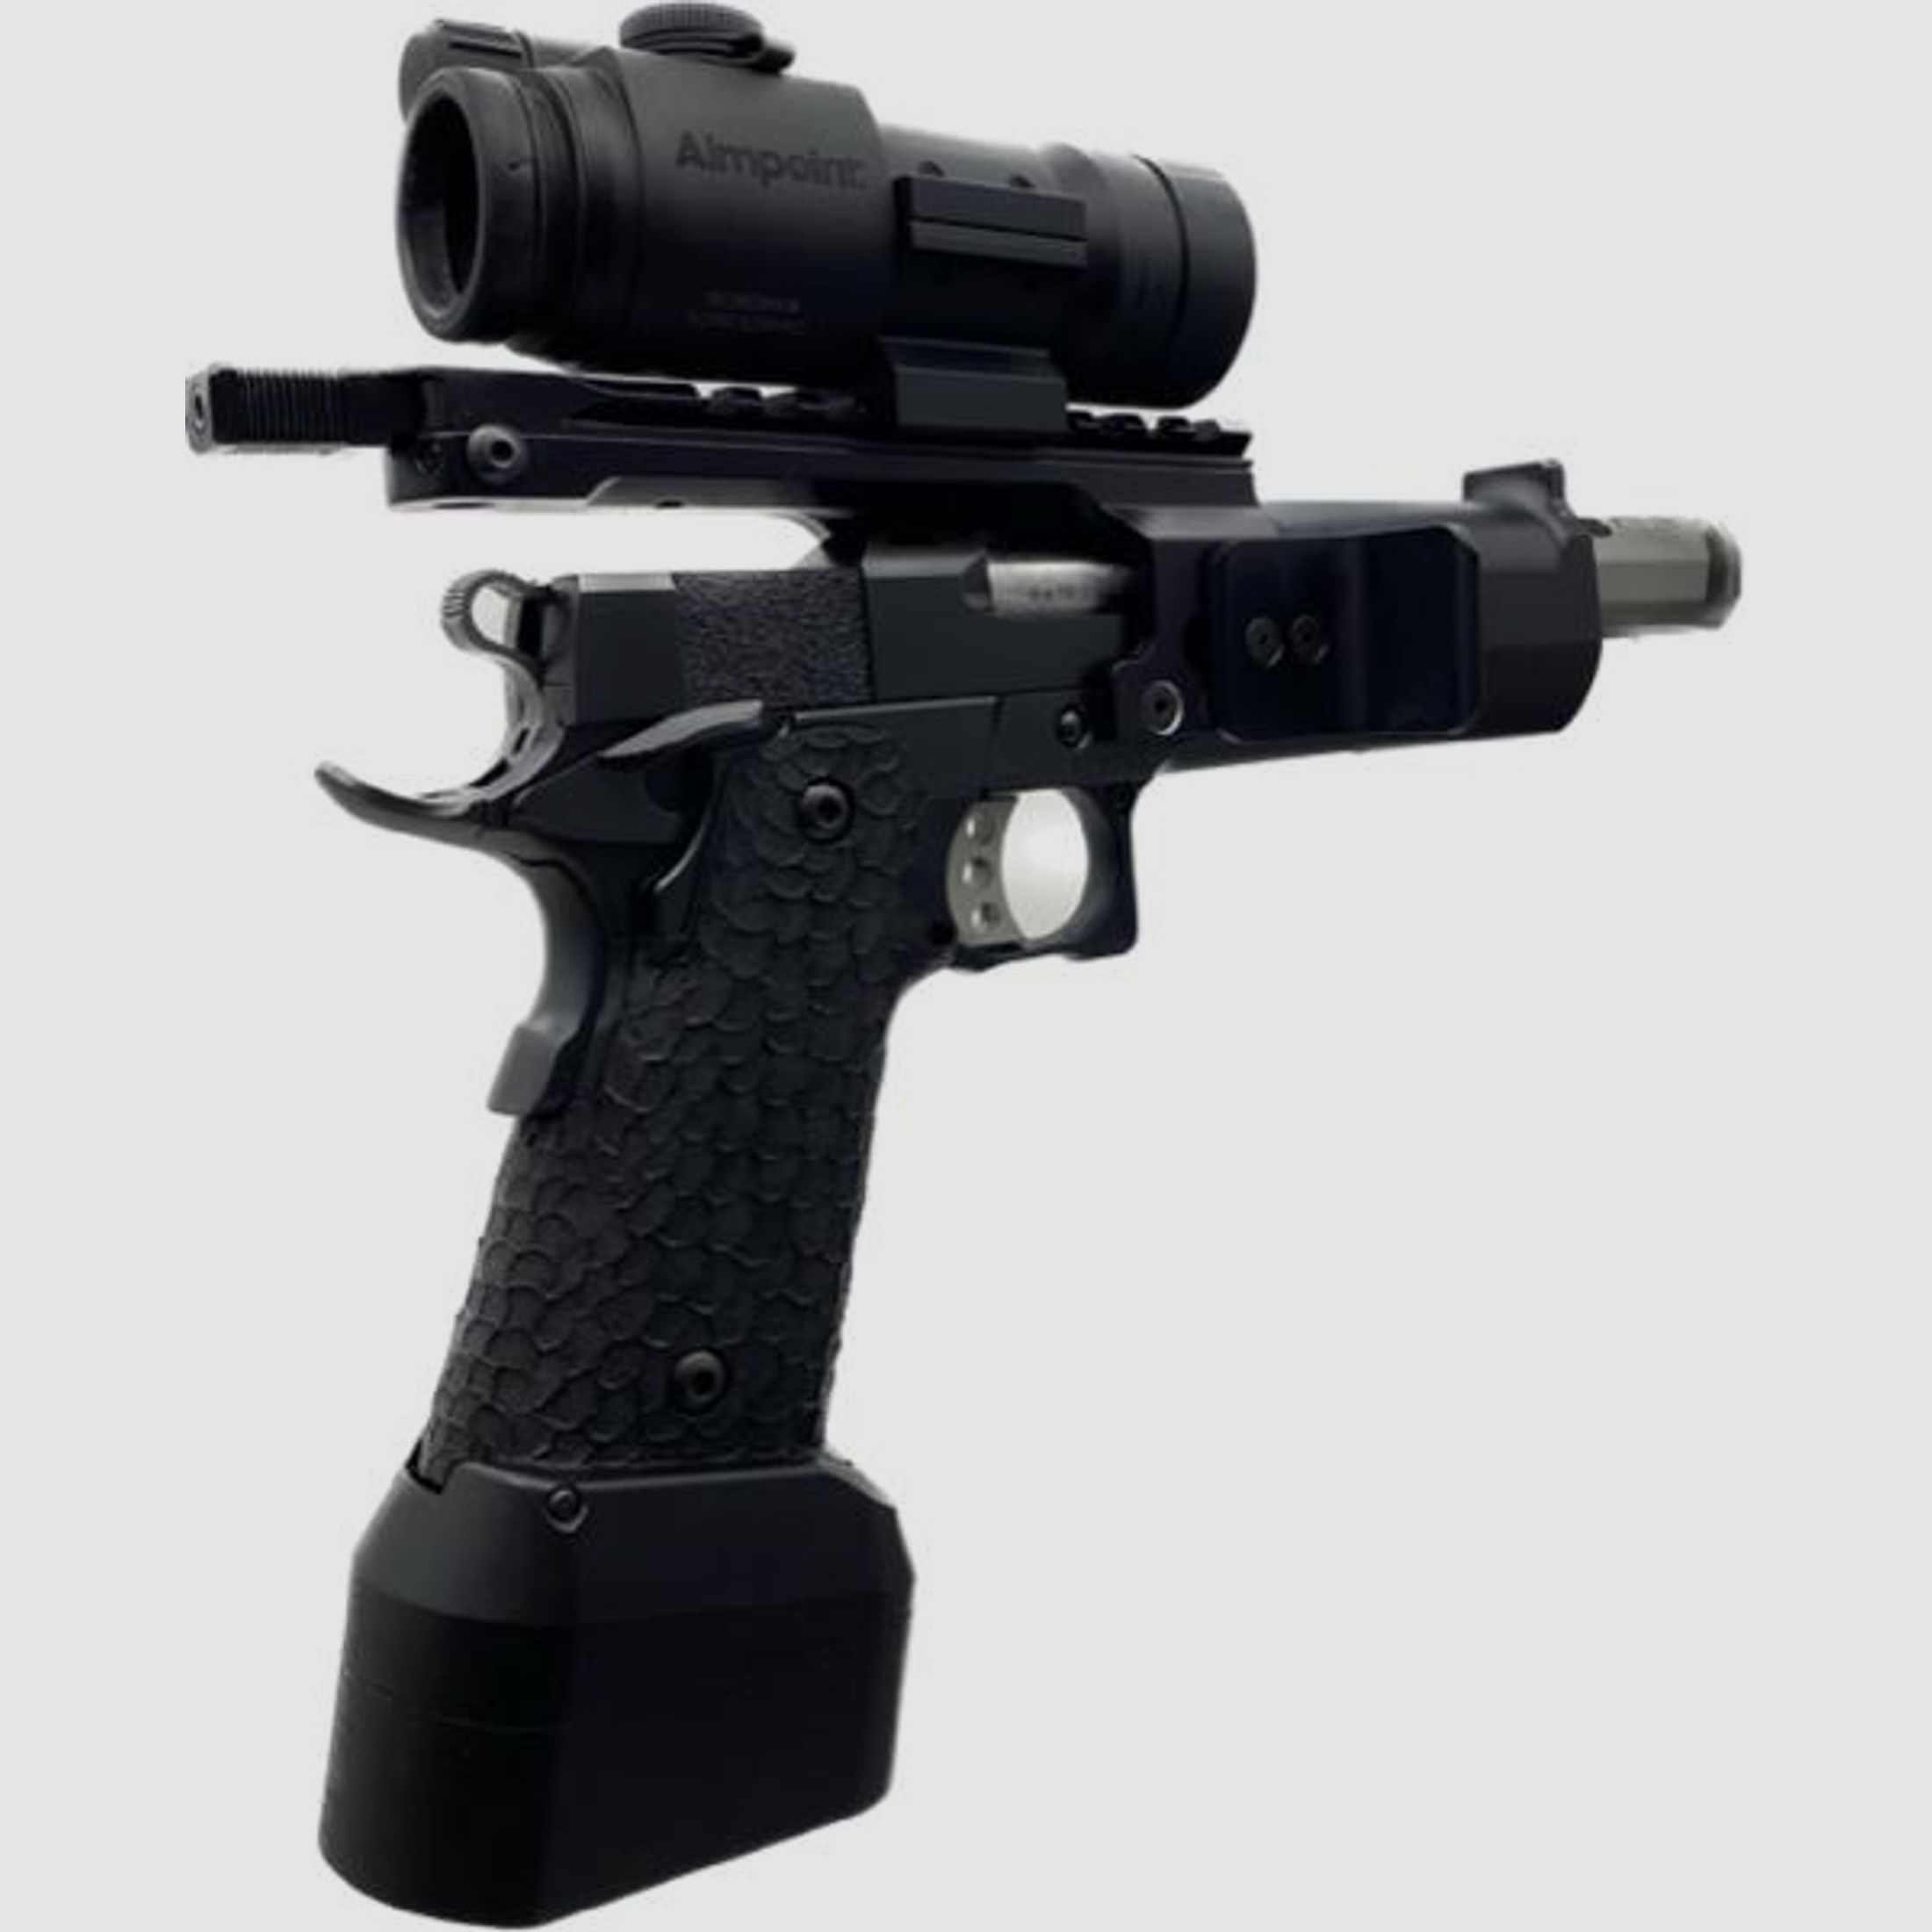 T'n T Triebel Pistole Mod. BianchiCup -STP Europa 9mmLuger